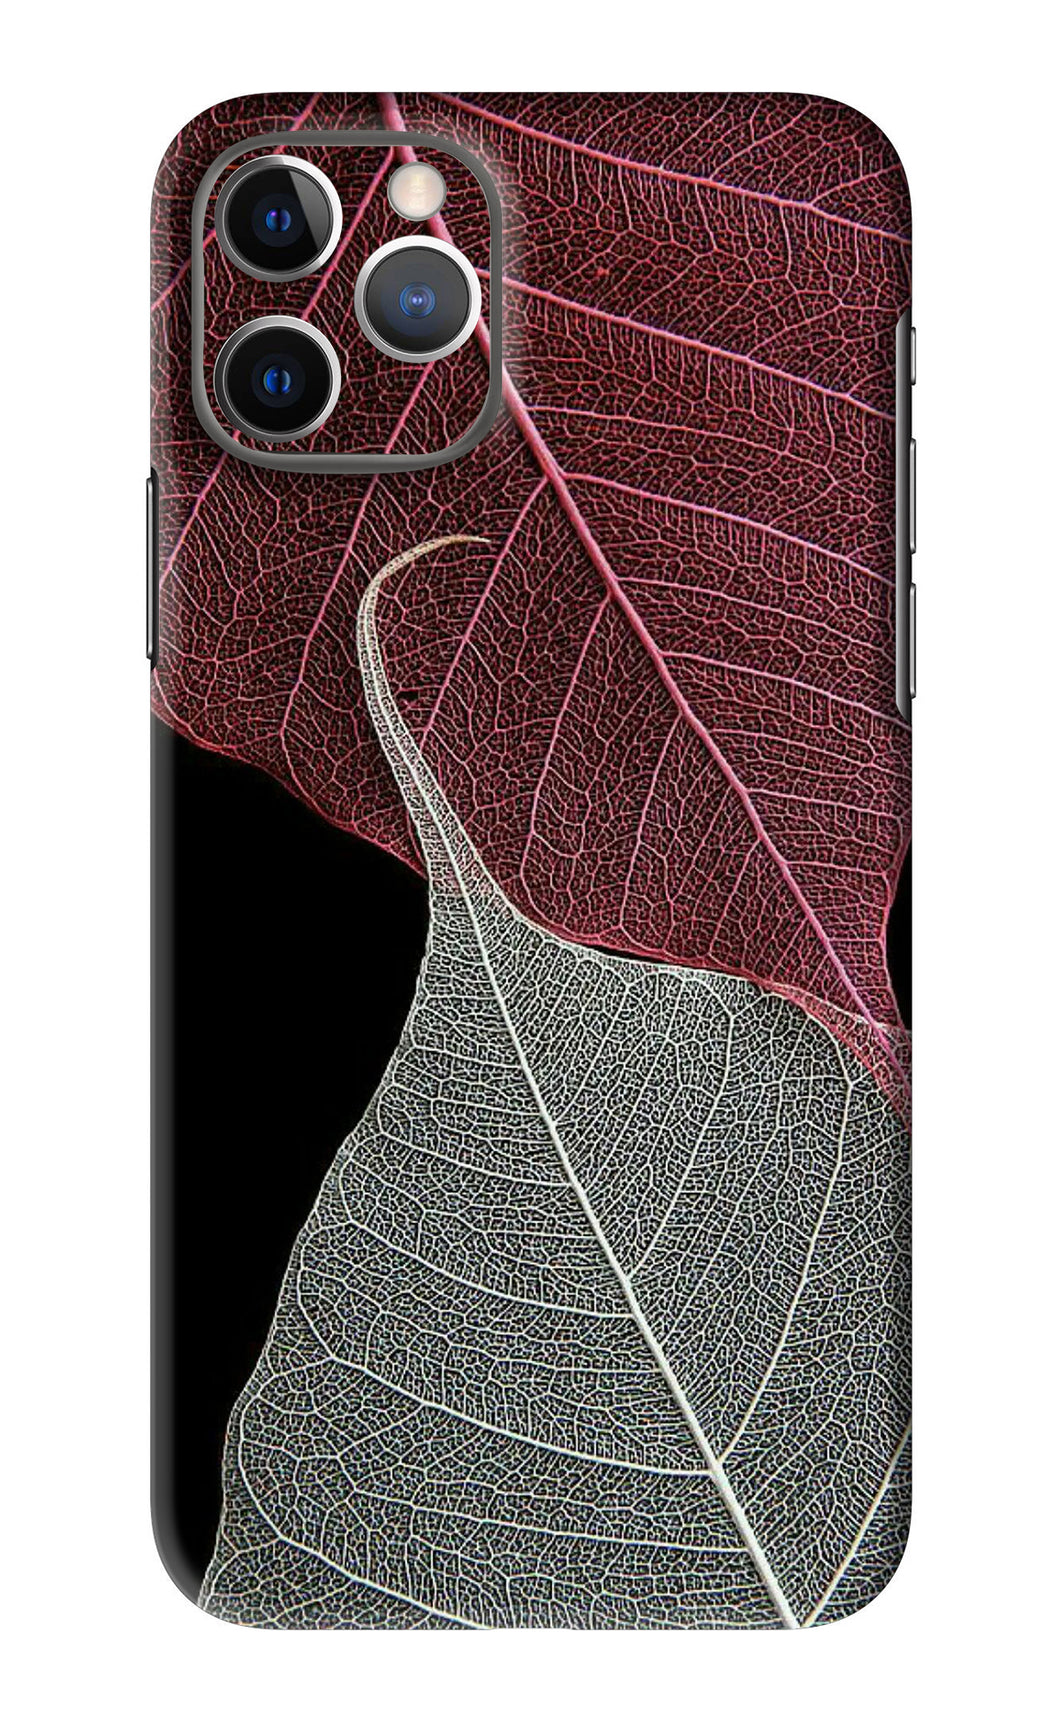 Leaf Pattern iPhone 11 Pro Max Back Skin Wrap